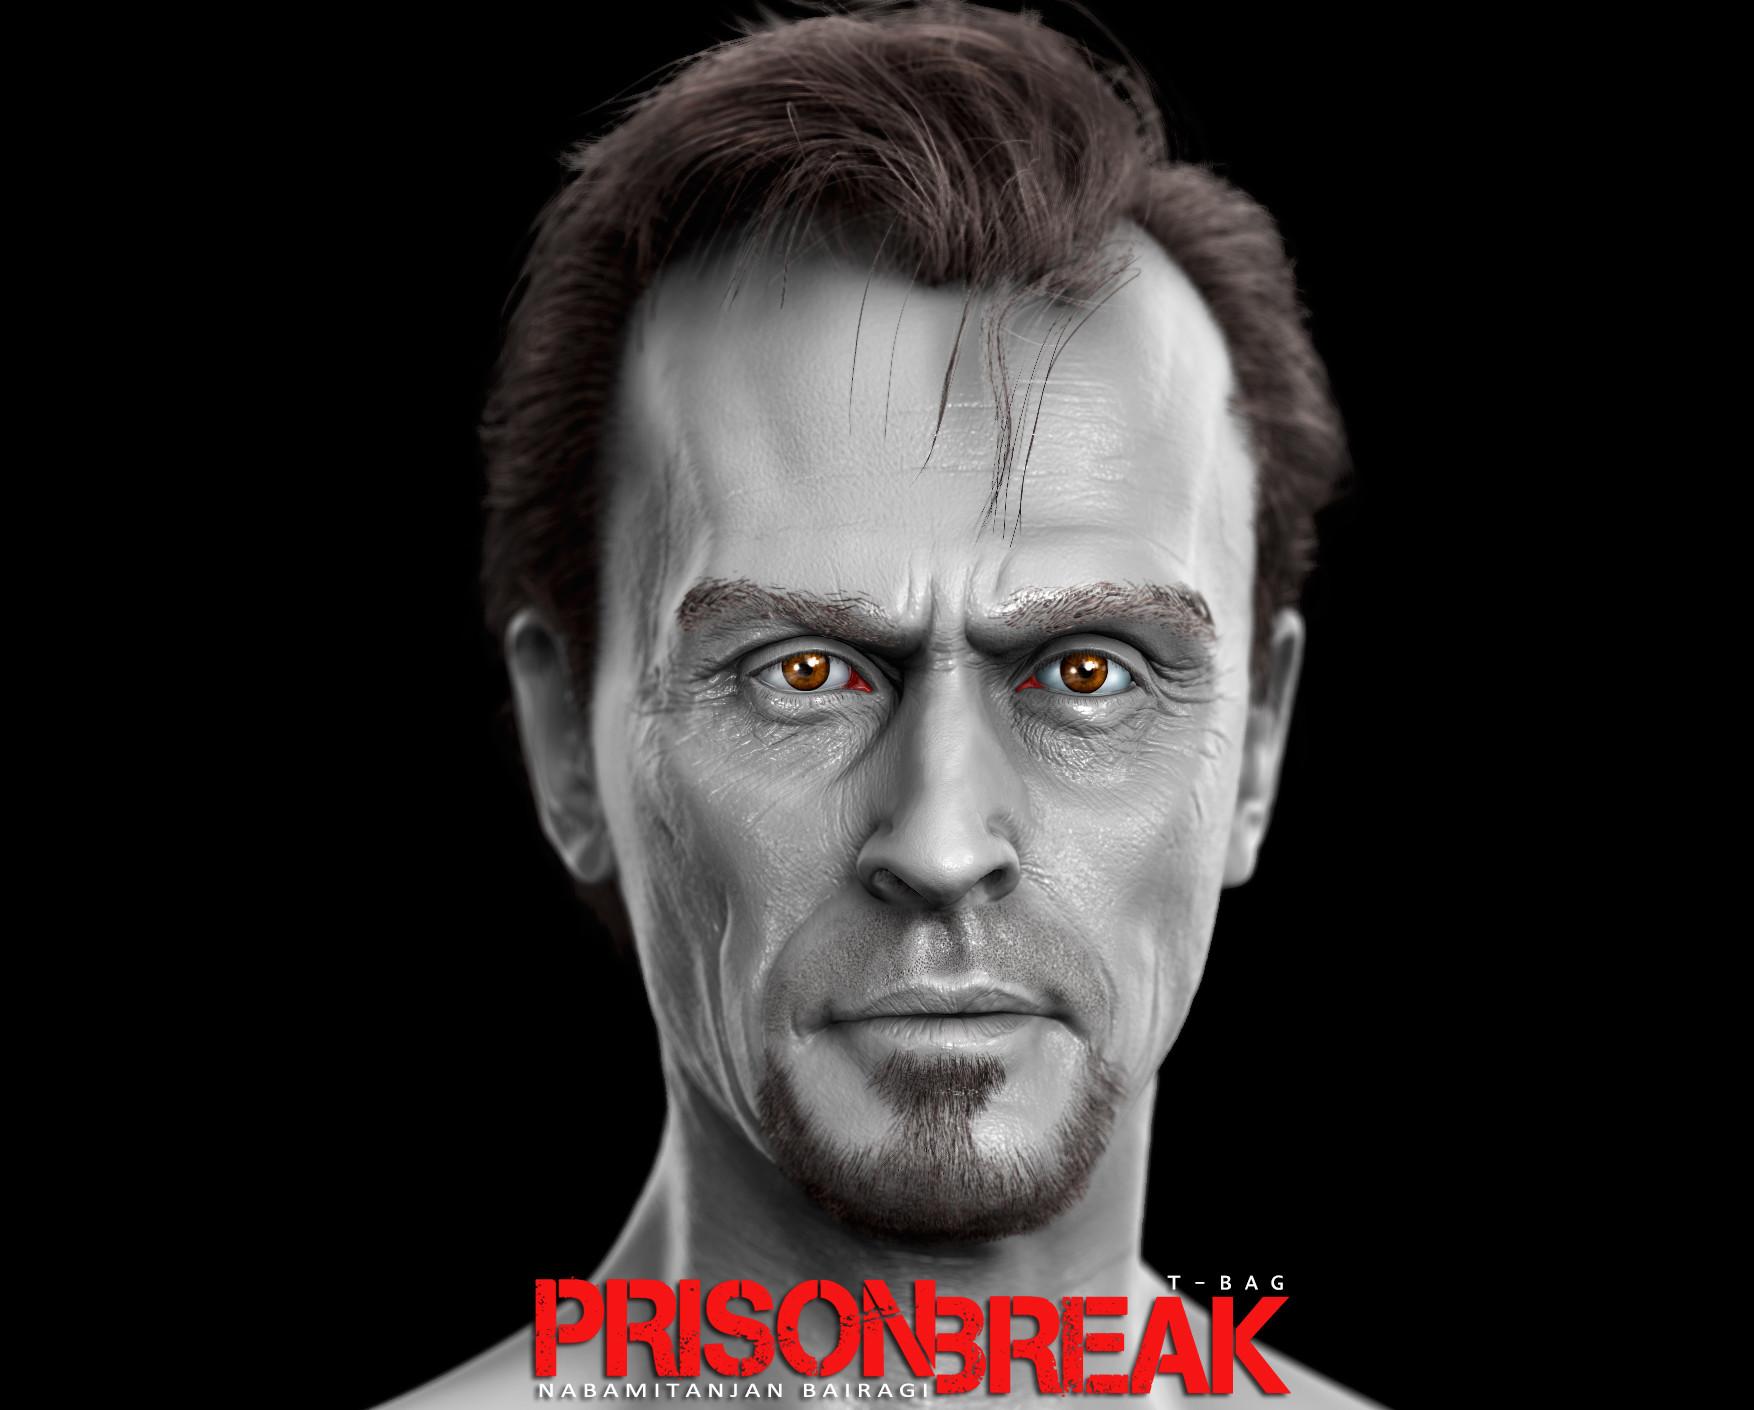 Prison Break Fan Art T BAG, Nabamitanjan Bairagi